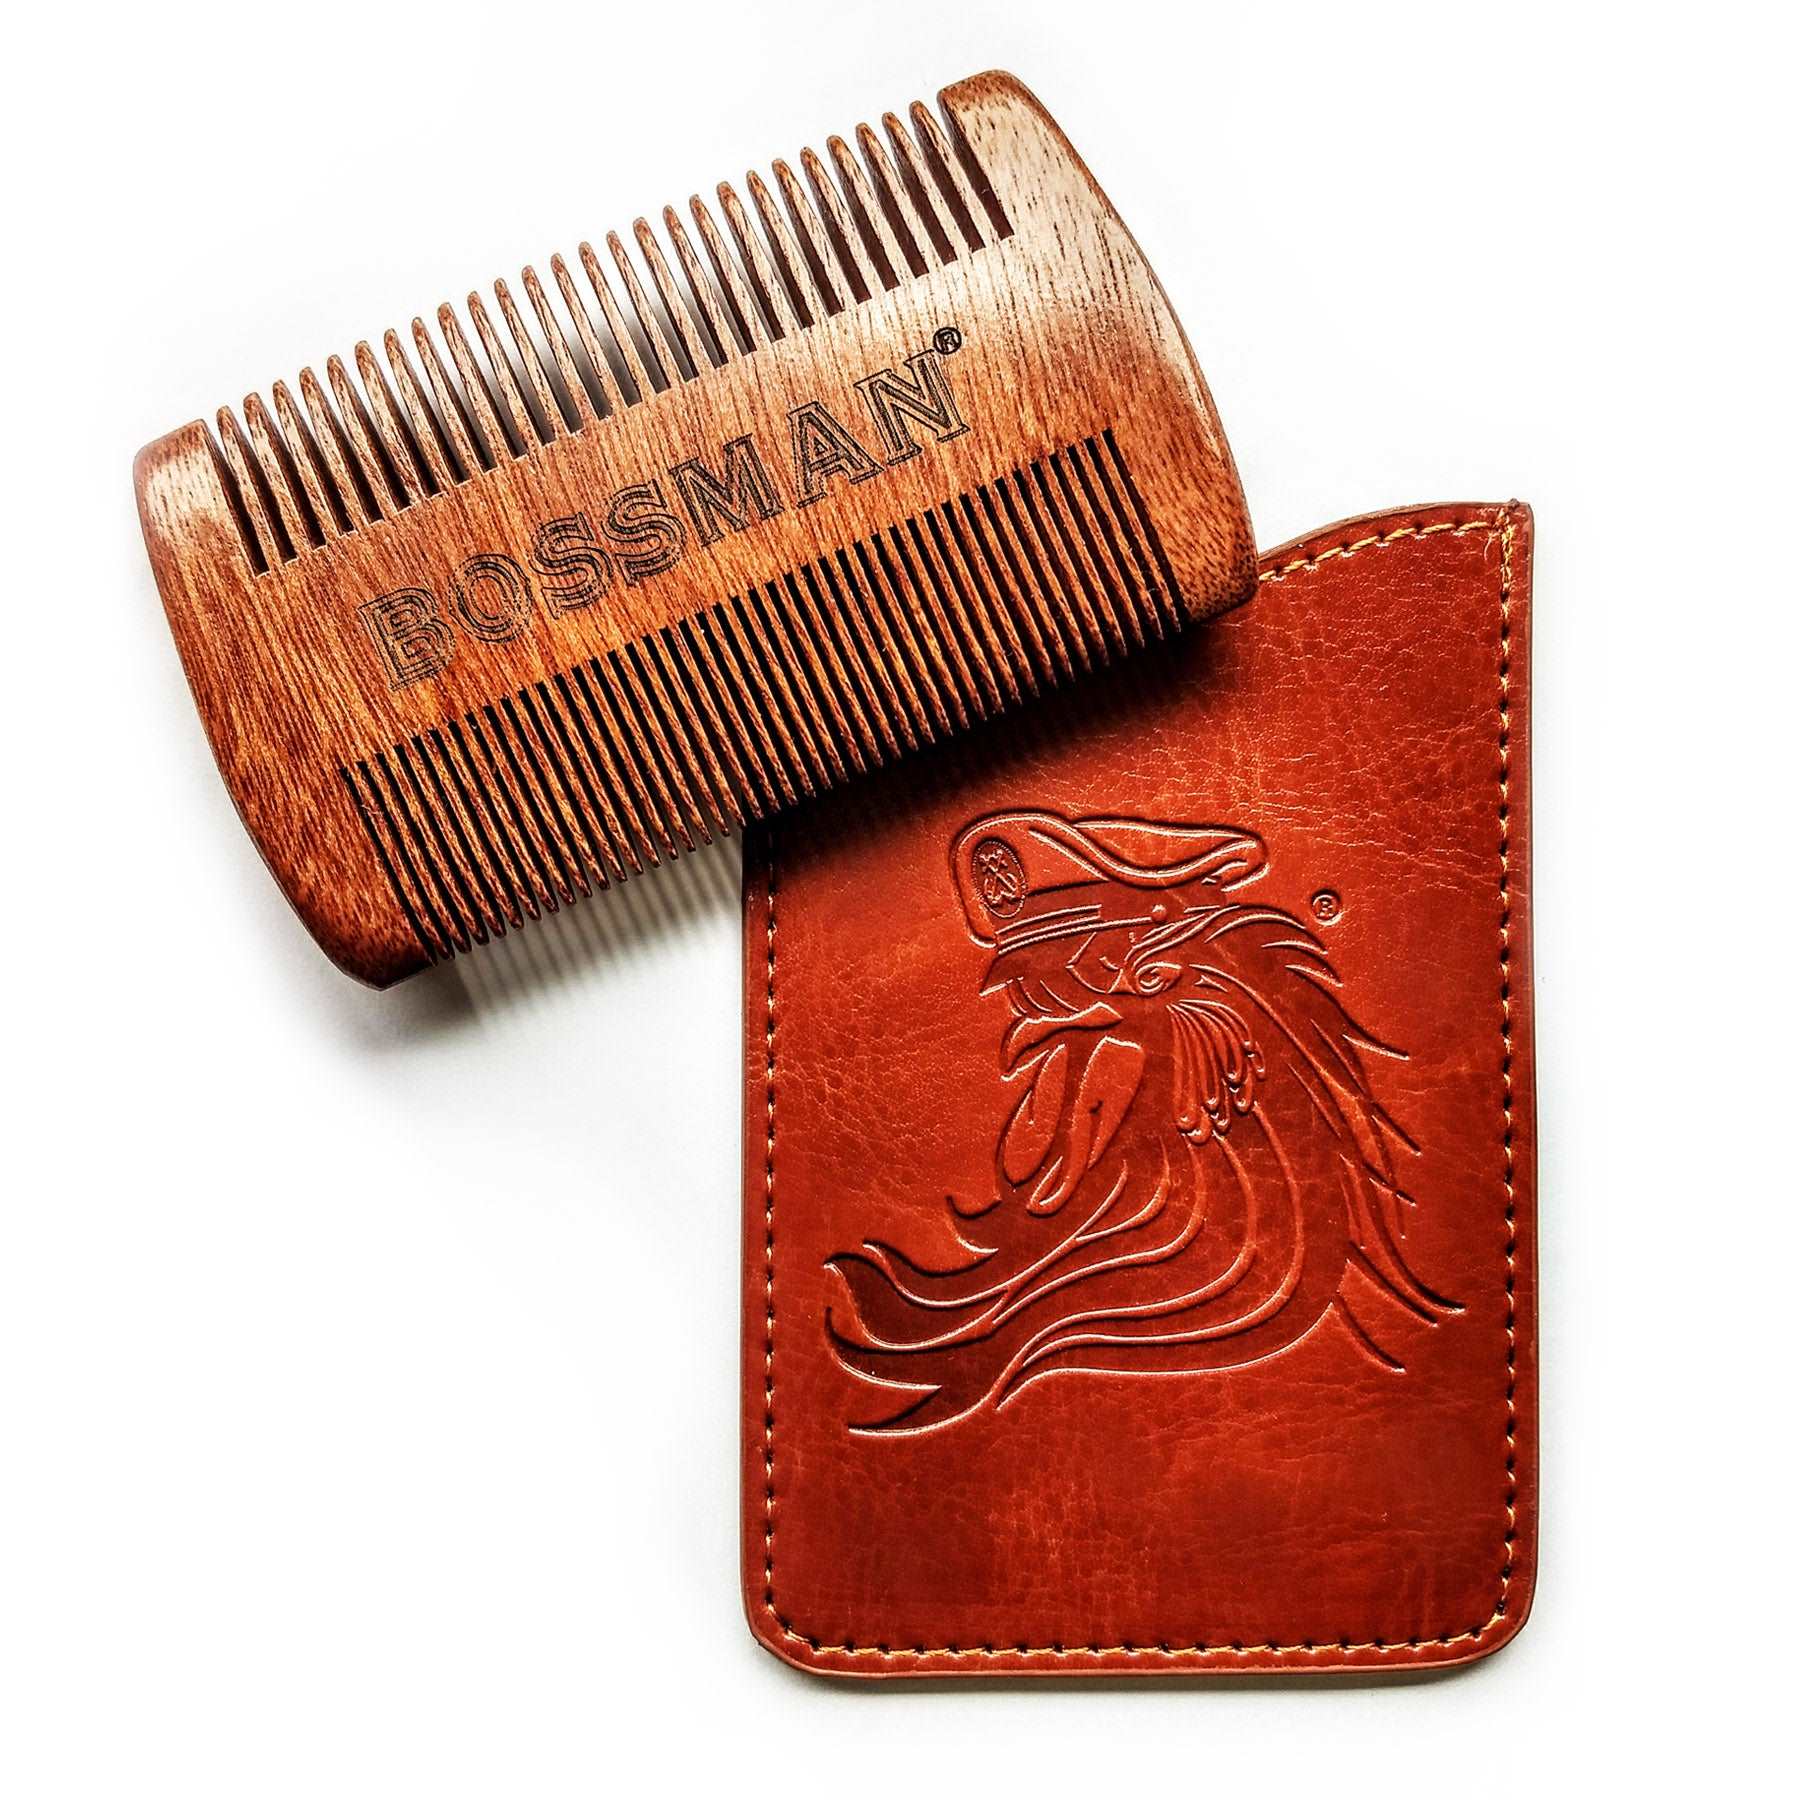 FREE Pocket Size Brown Sandalwood Comb Bossman Brands